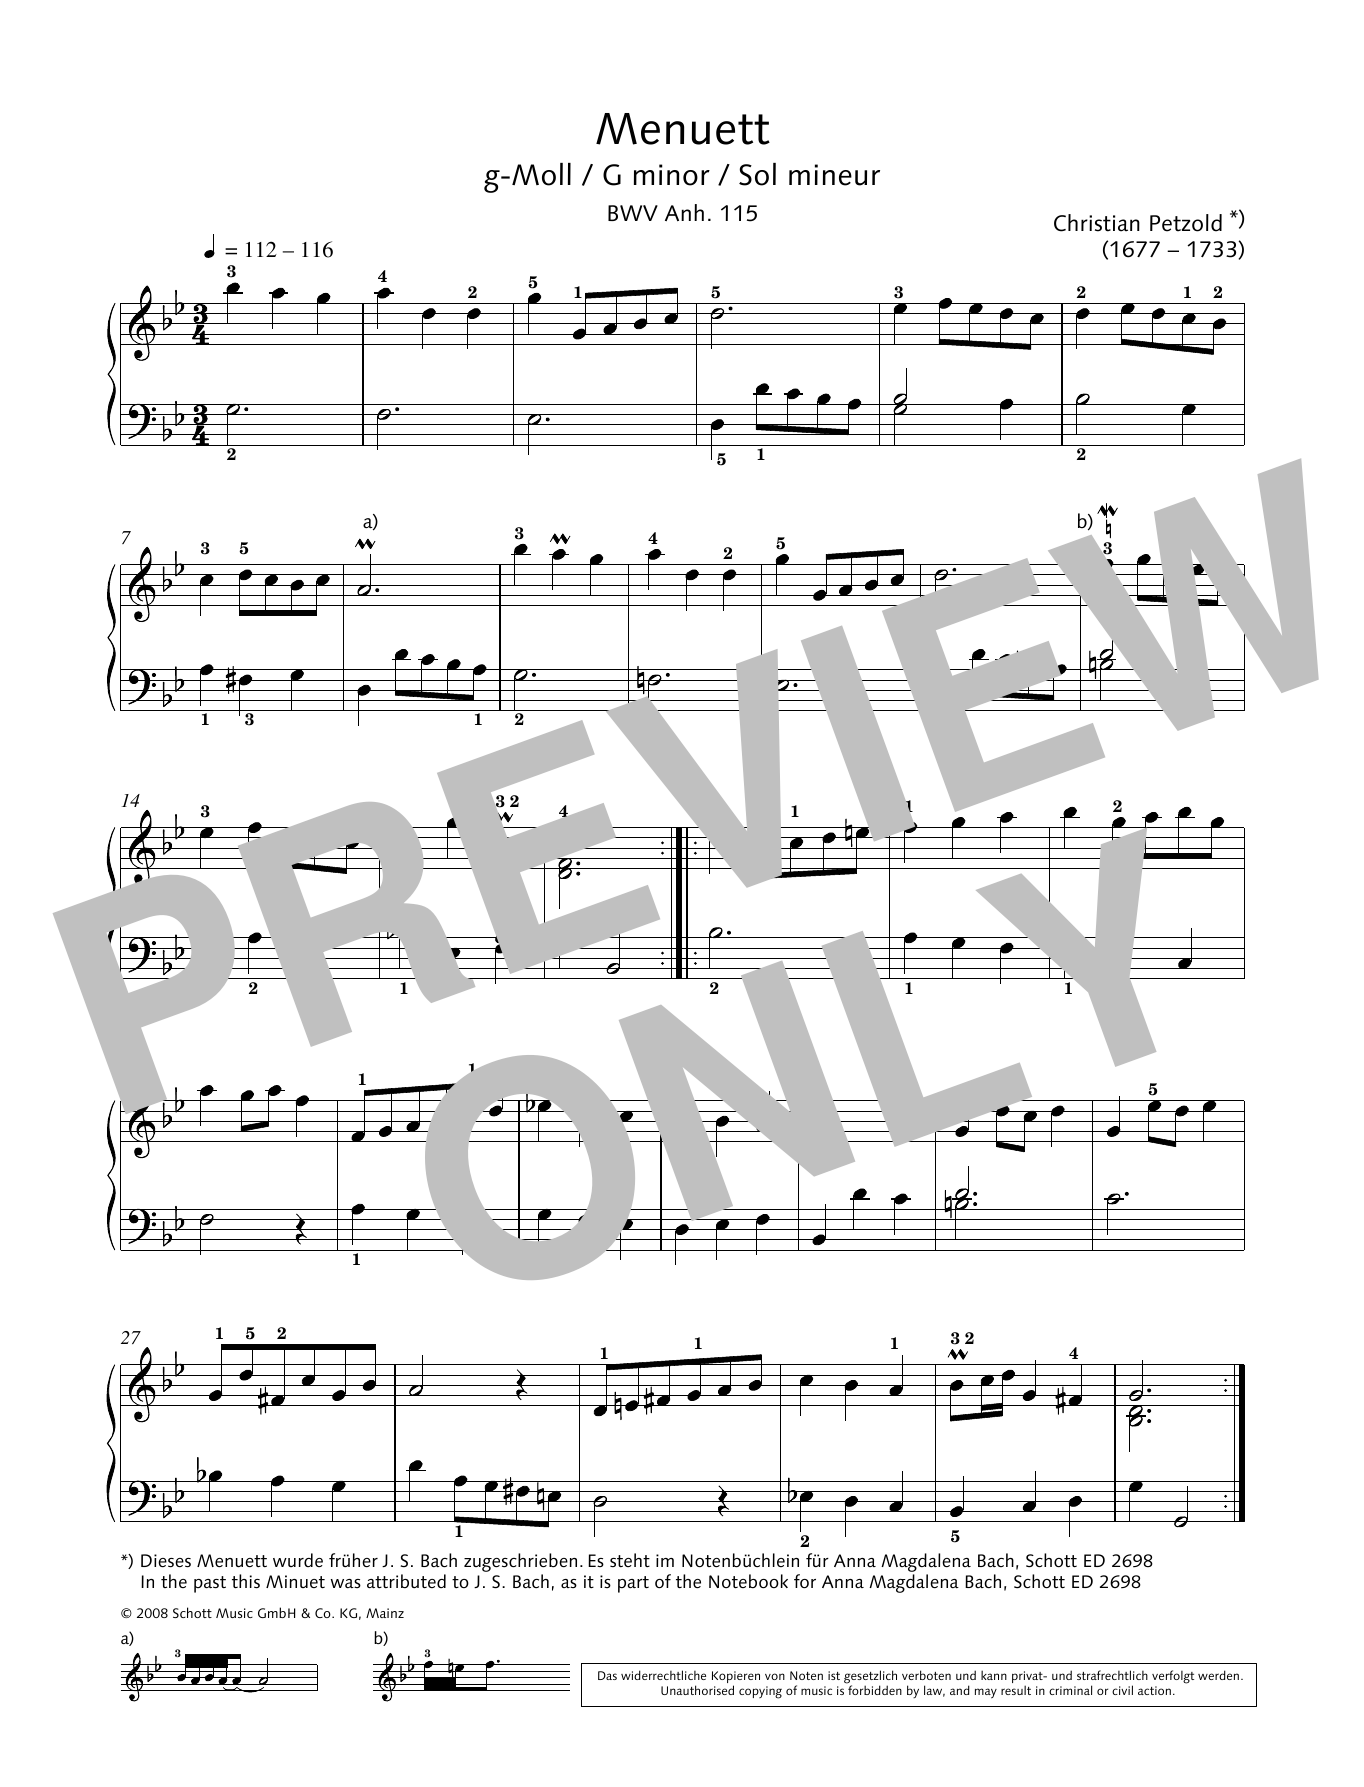 Download Christian Petzold Minuet In G Minor, BWV Anh. 115 Sheet Music